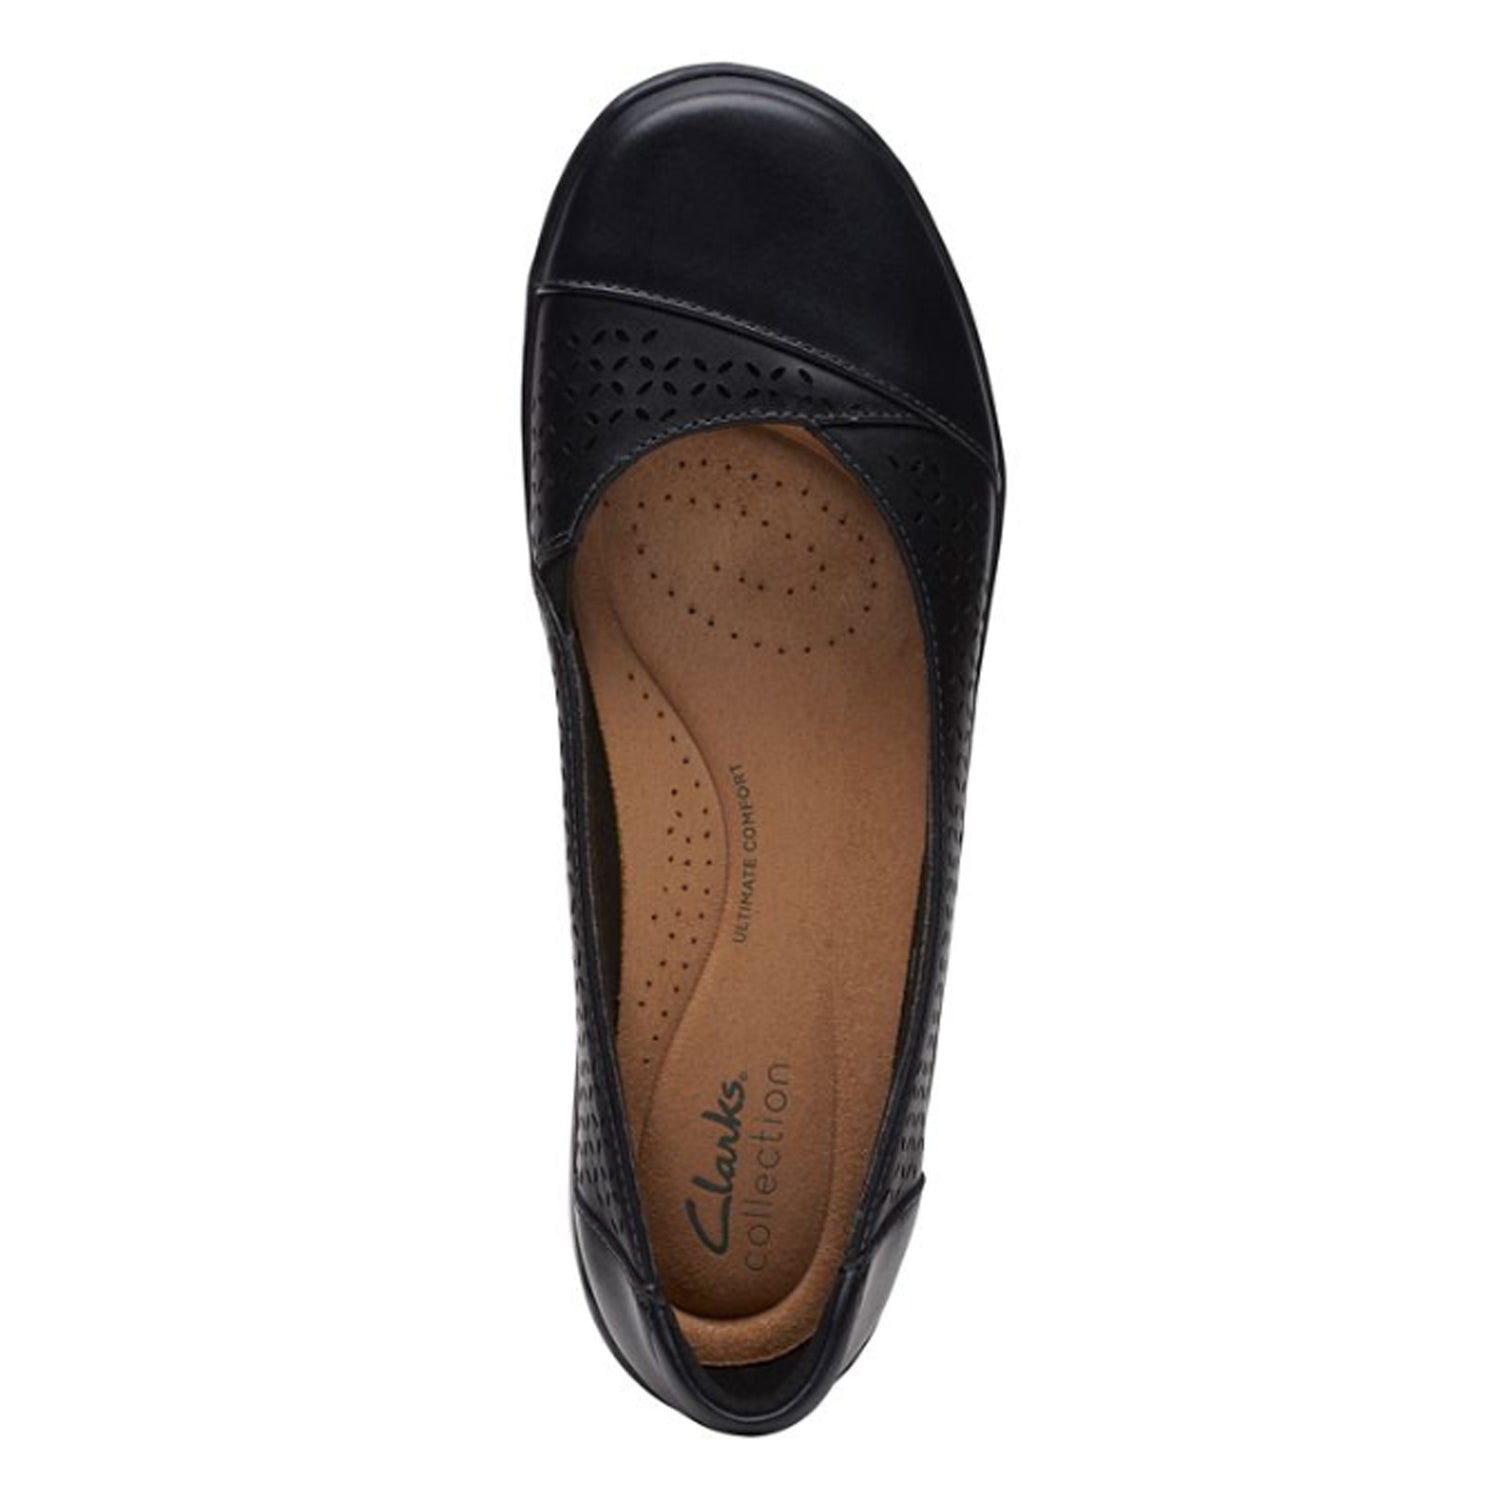 Peltz Shoes  Women's Clarks Cora Iris Slip-On BLACK 26170463